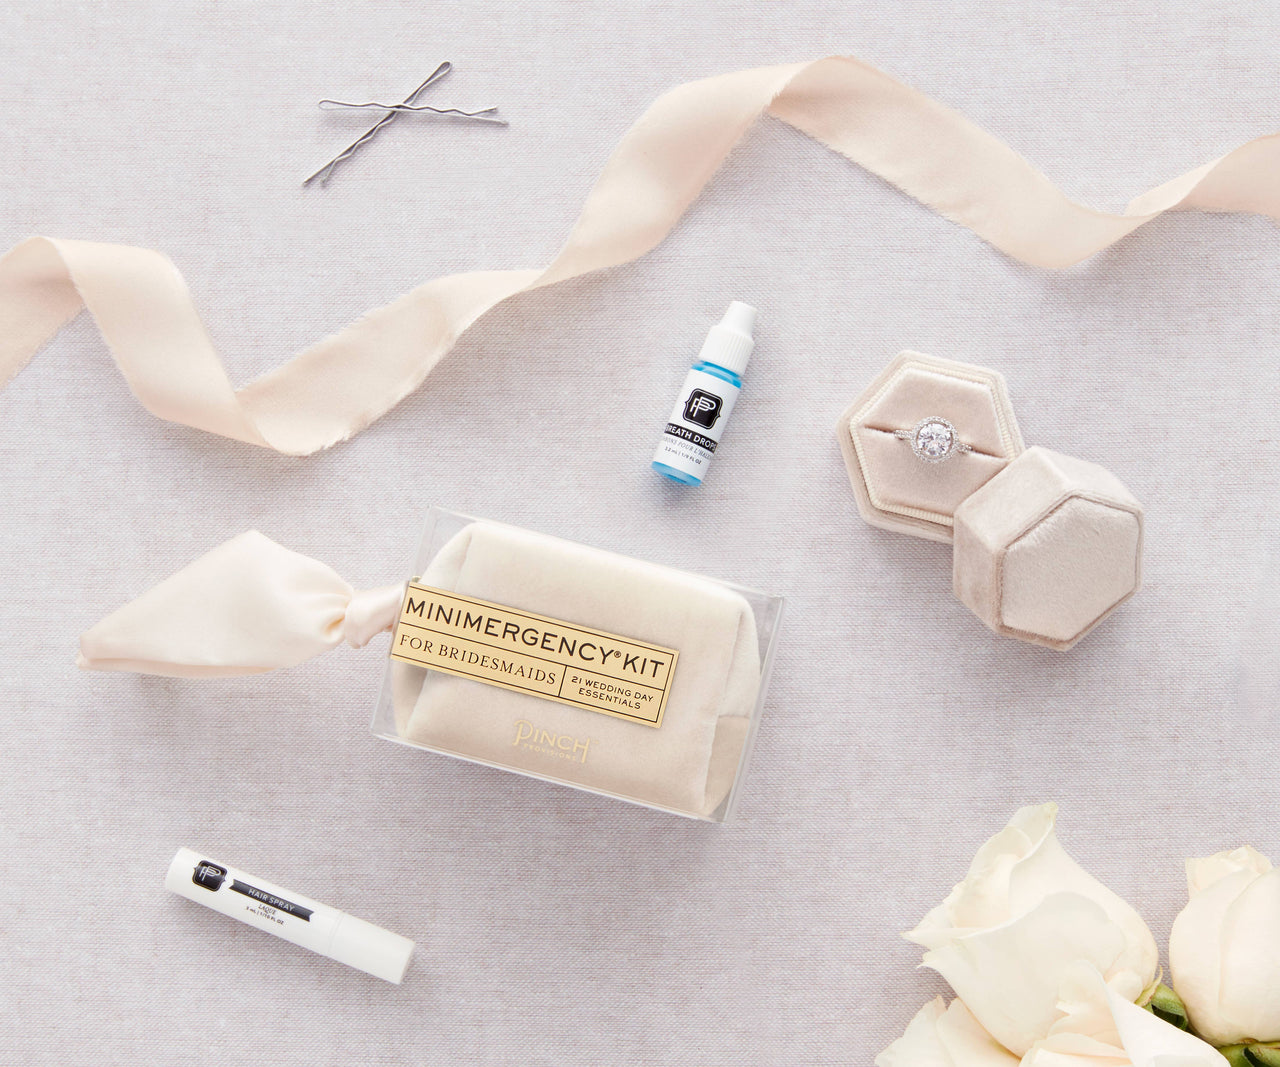 Velvet Minimergency Kits for Bridesmaids: Blush Pinch Provisions